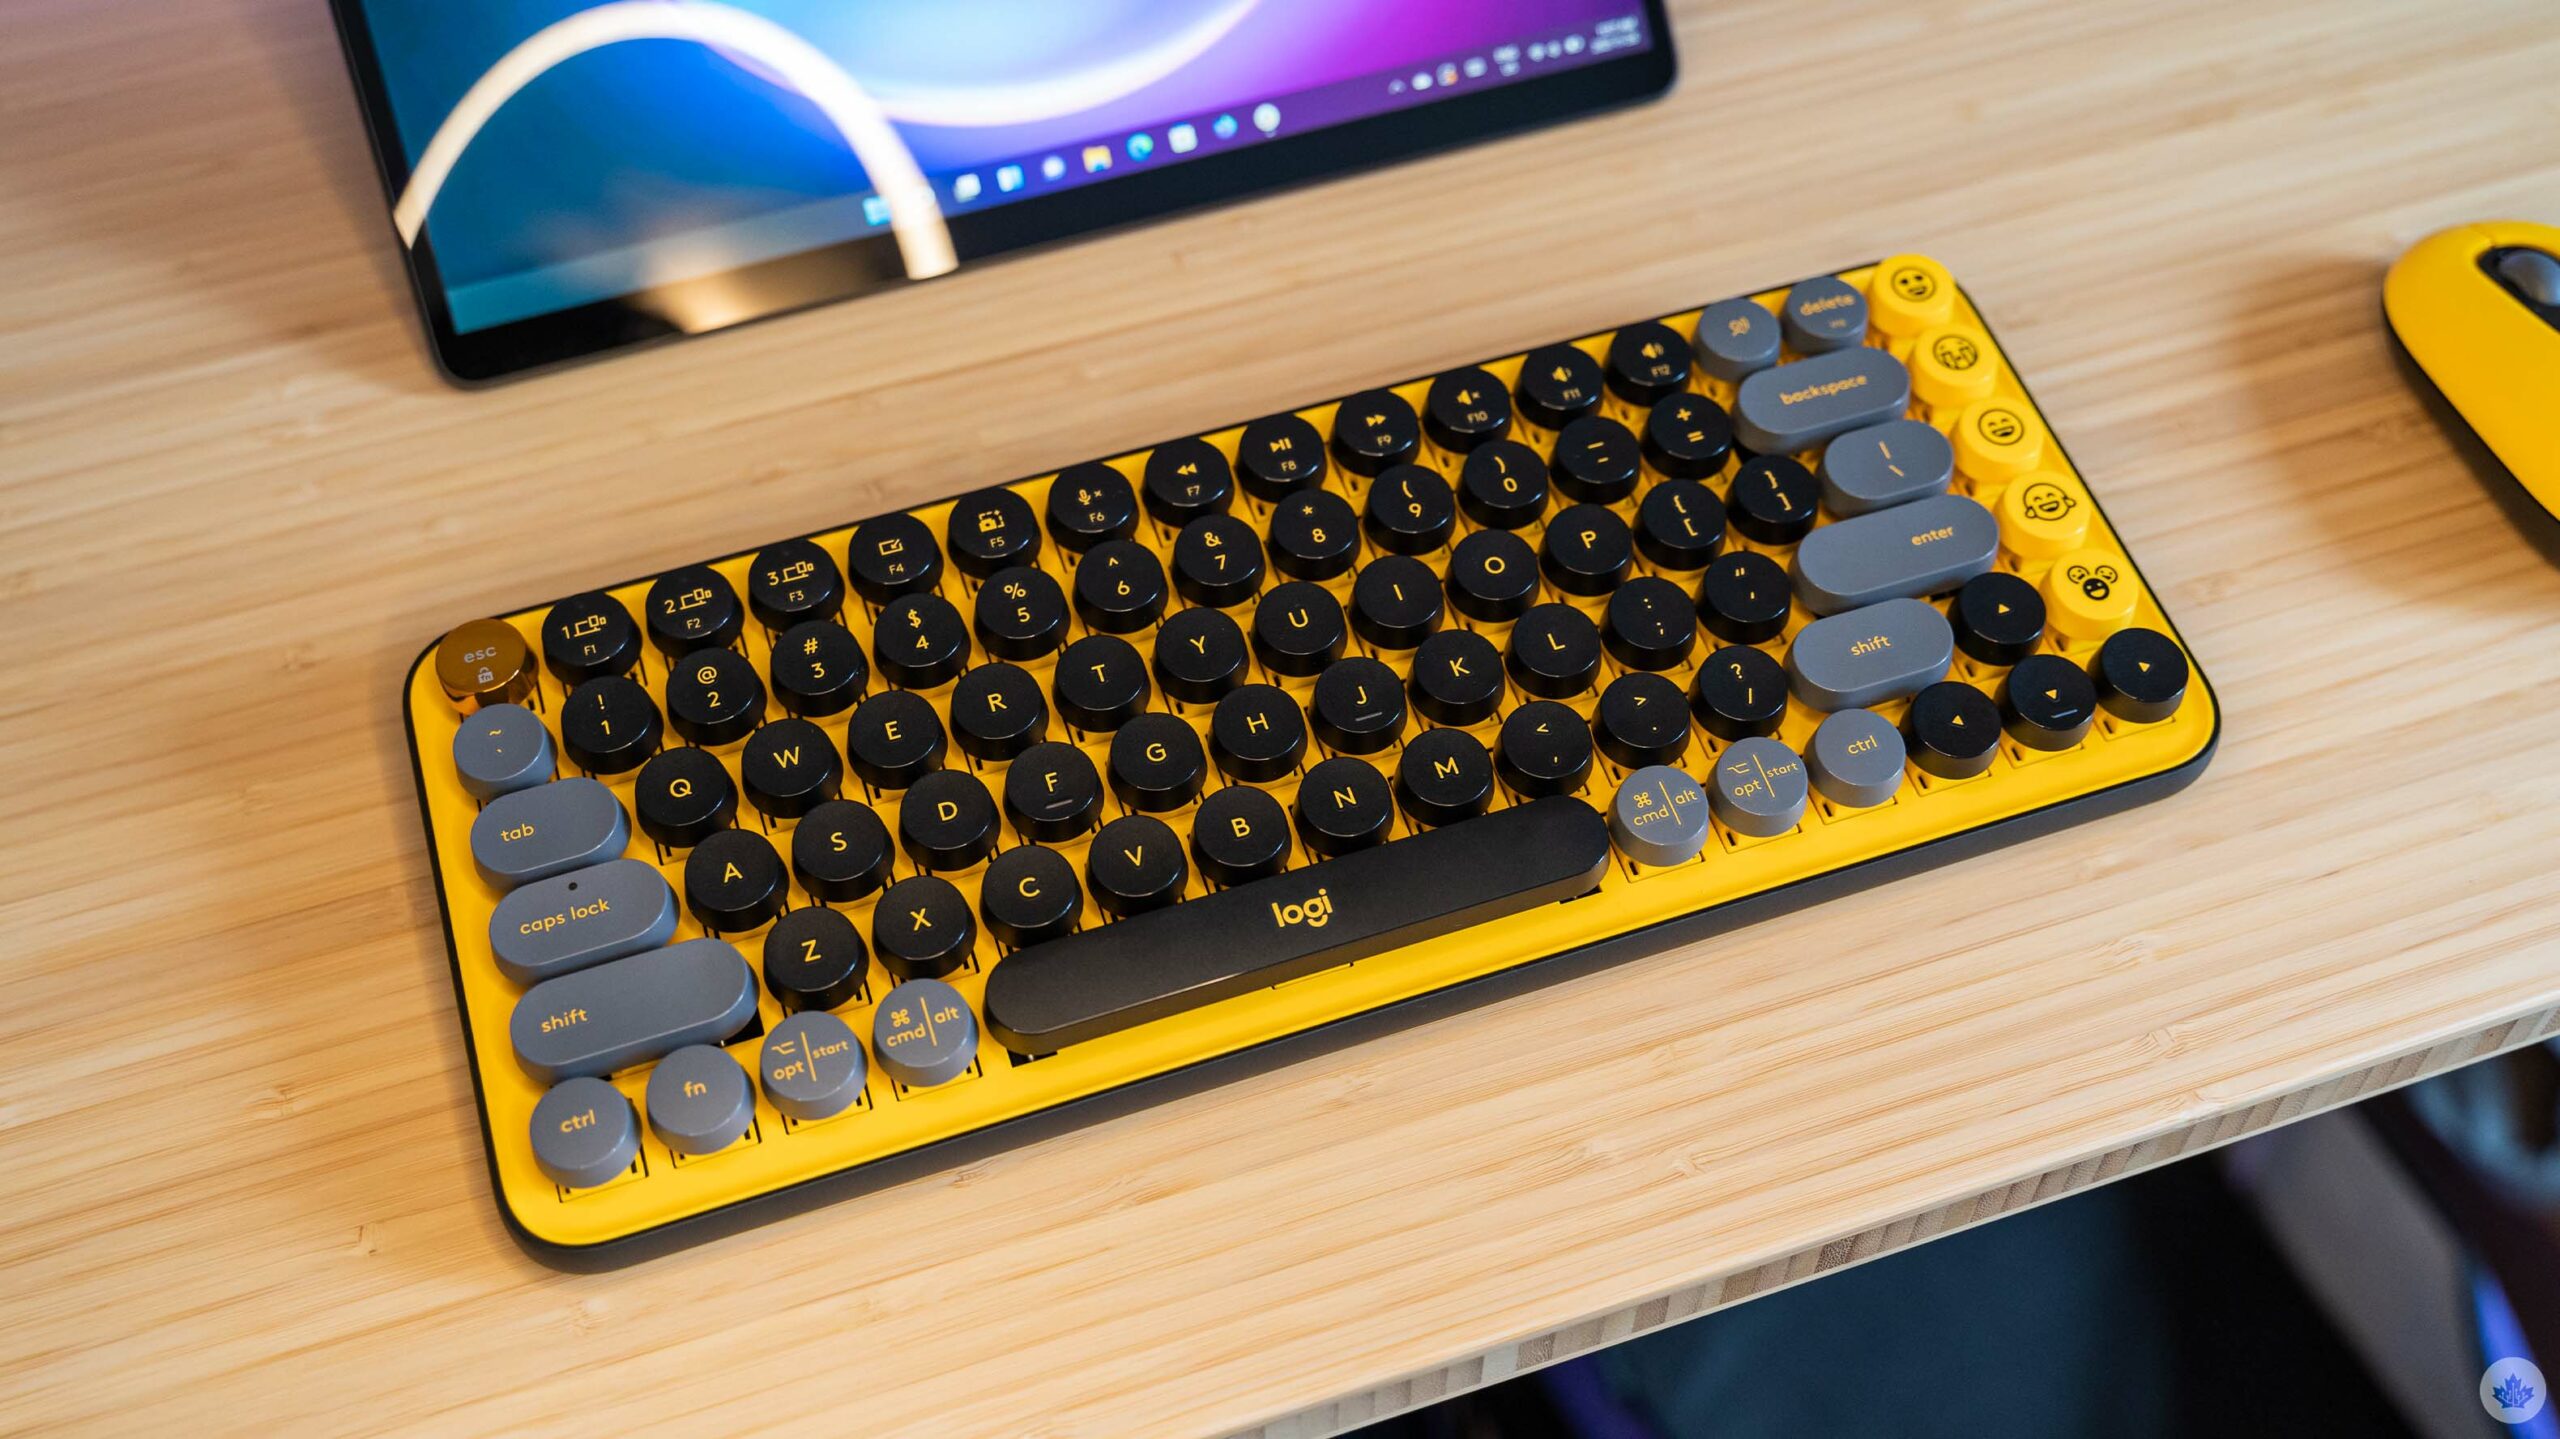 clarity acid Harmony Logitech's Pop Keys keyboard looks fantastic but isn't the best for typing